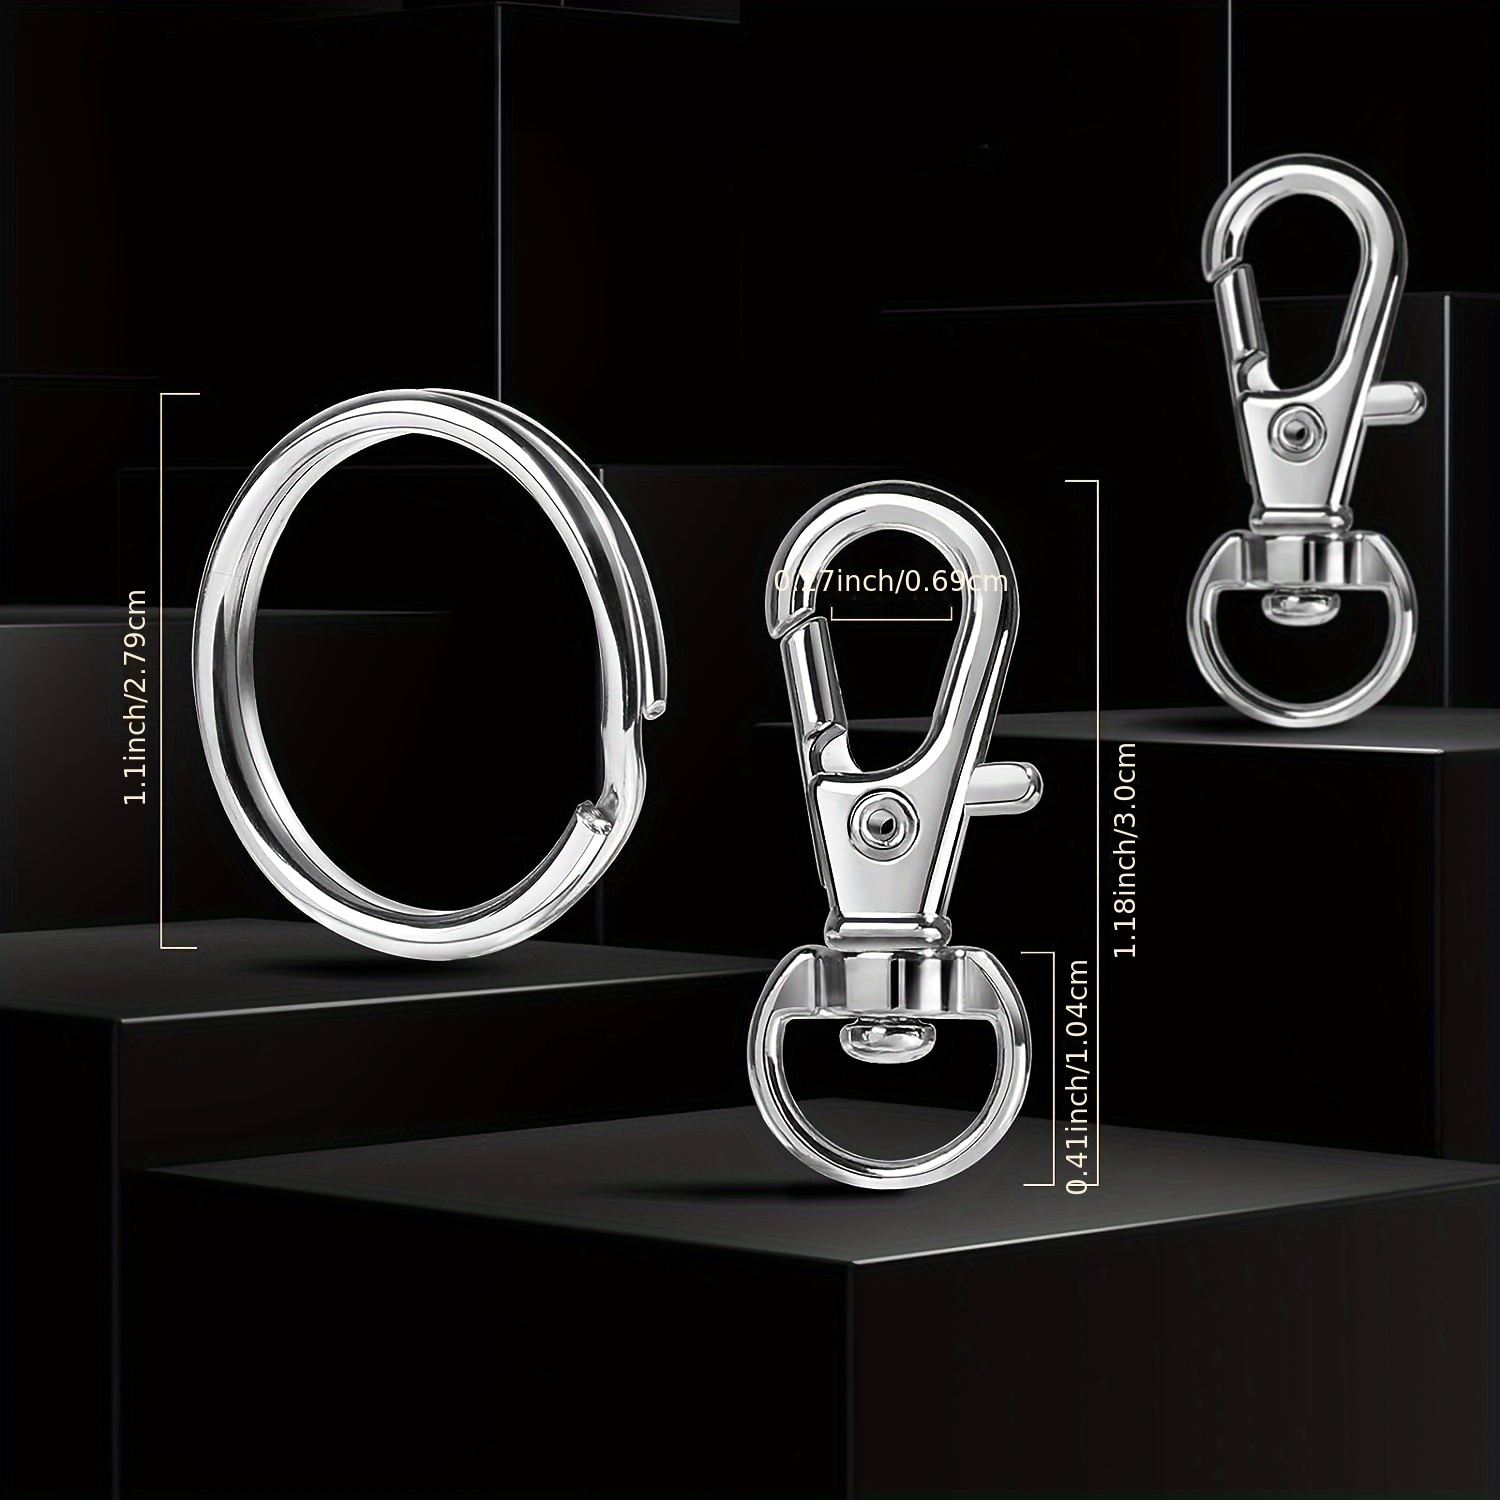  100PCS Premium Swivel Snap Hooks with Key Rings,Metal